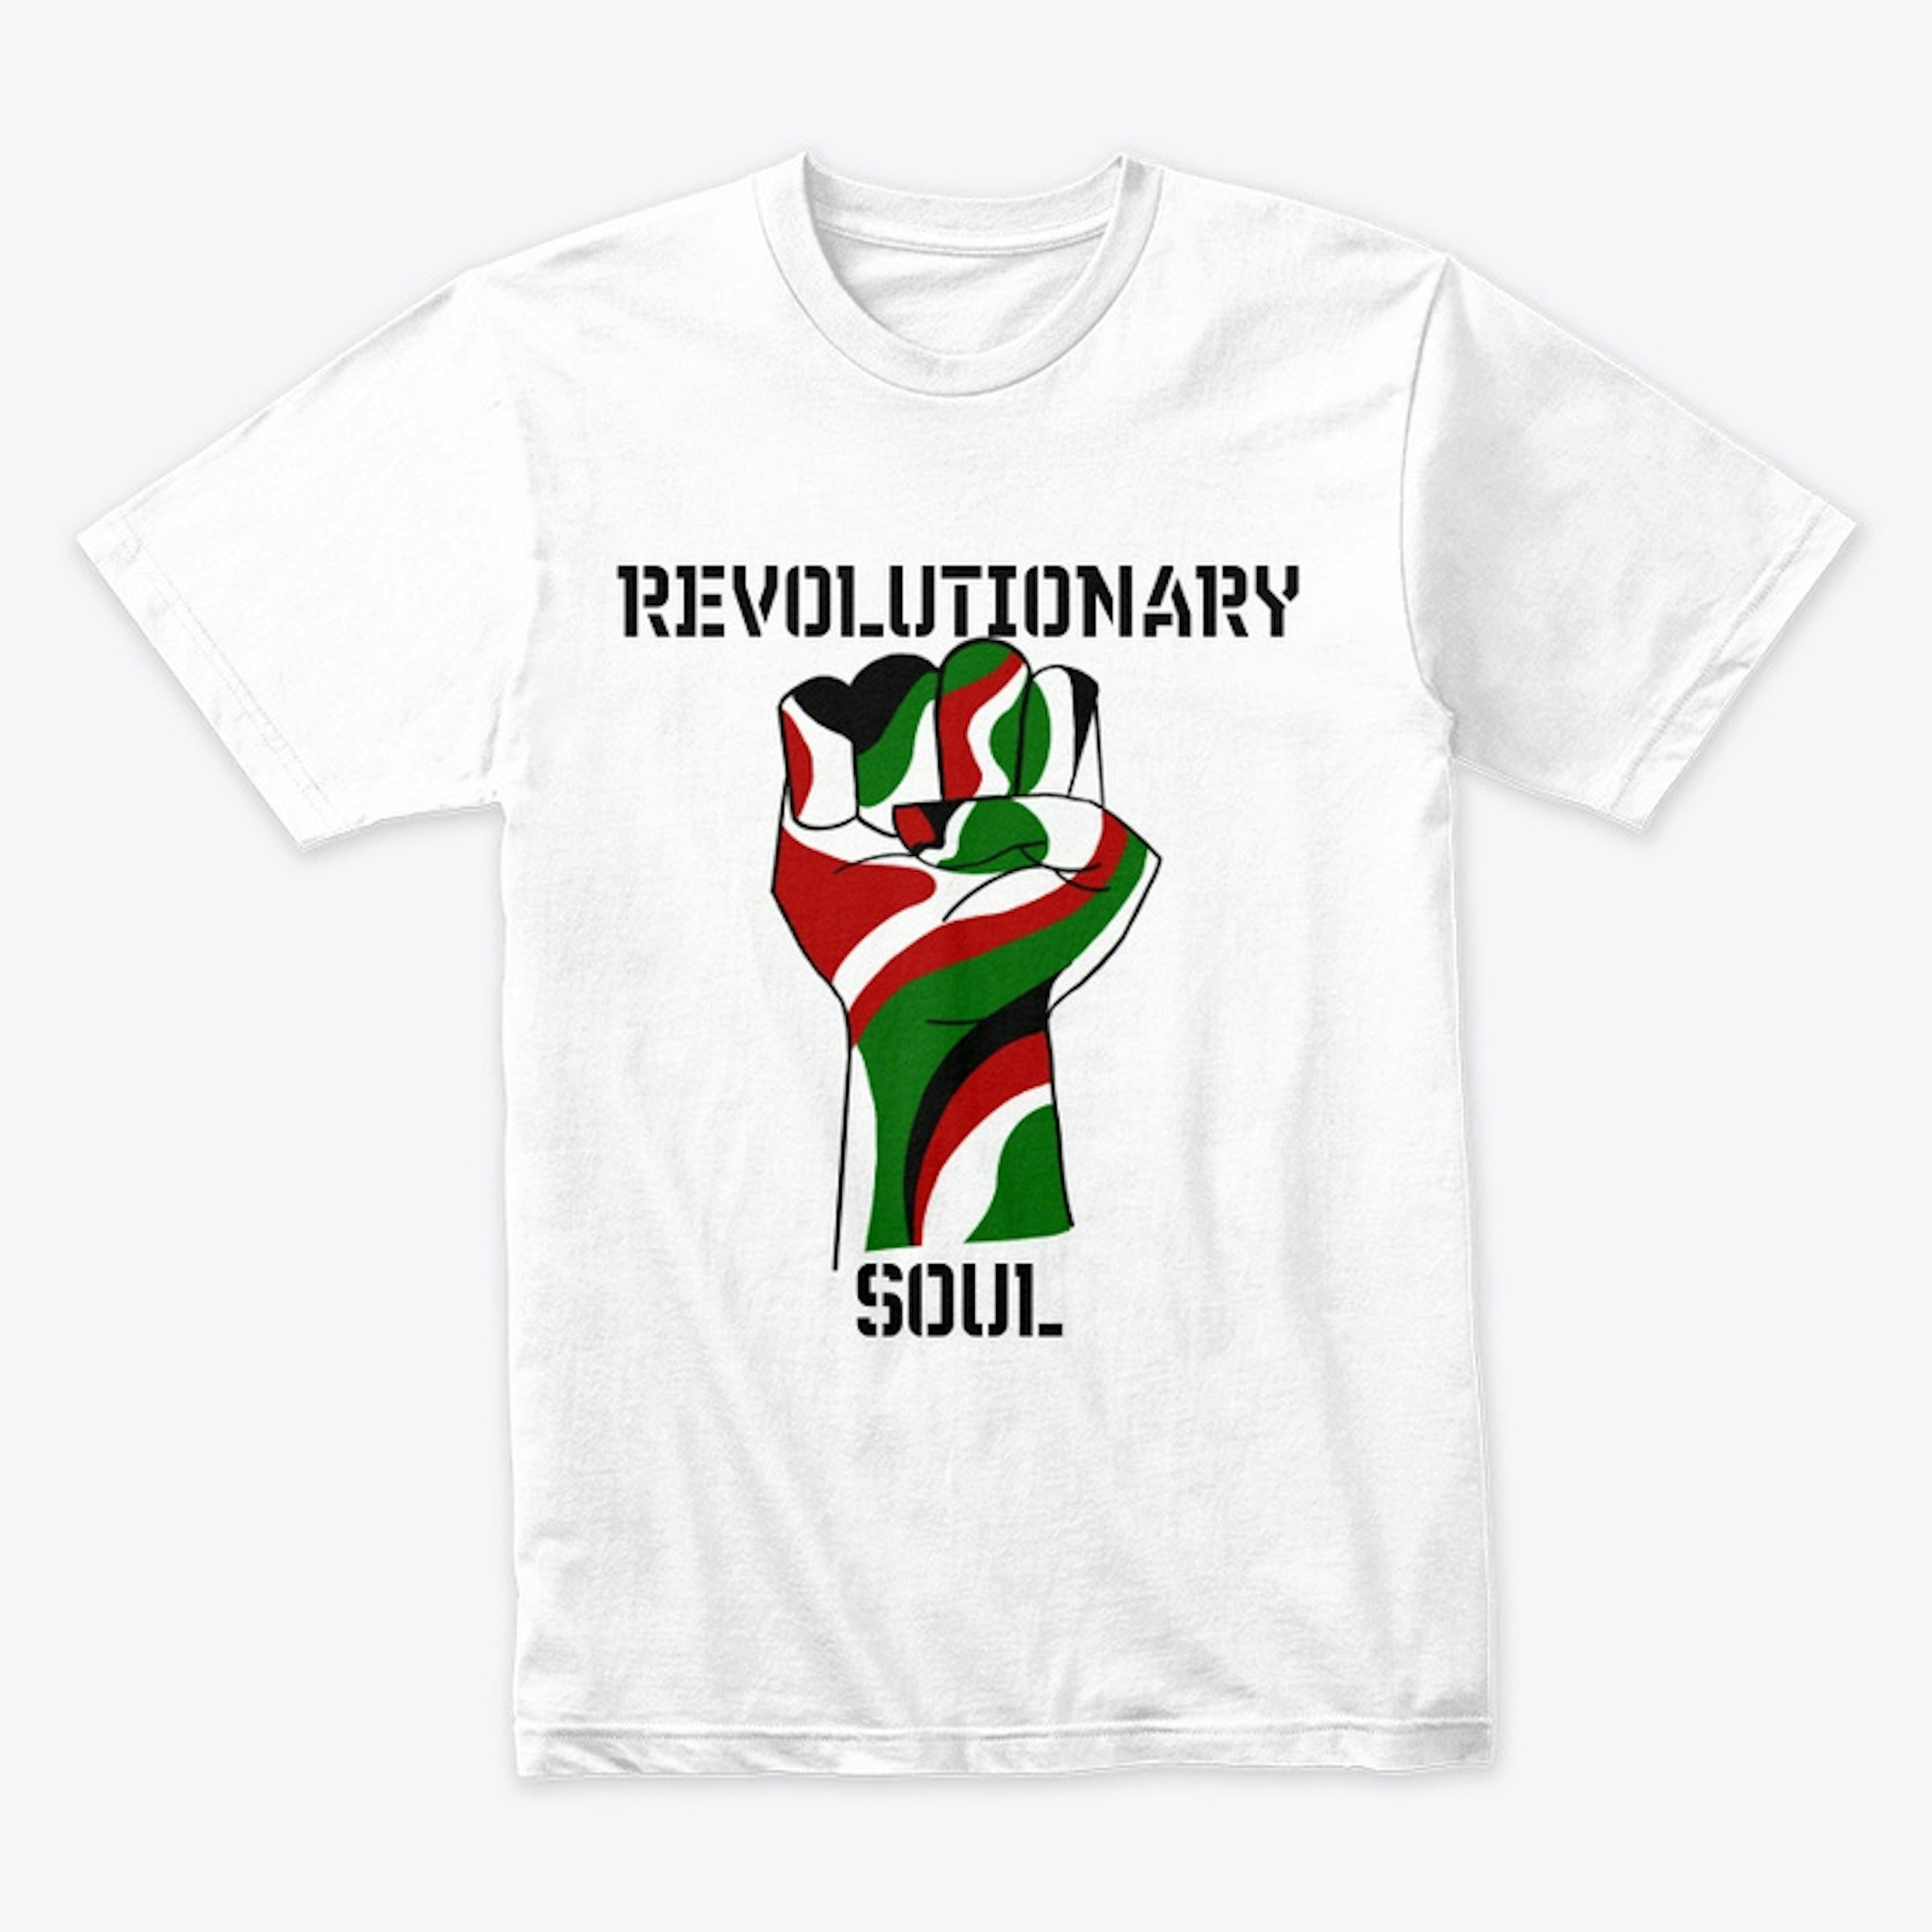 Revolutionary Soul